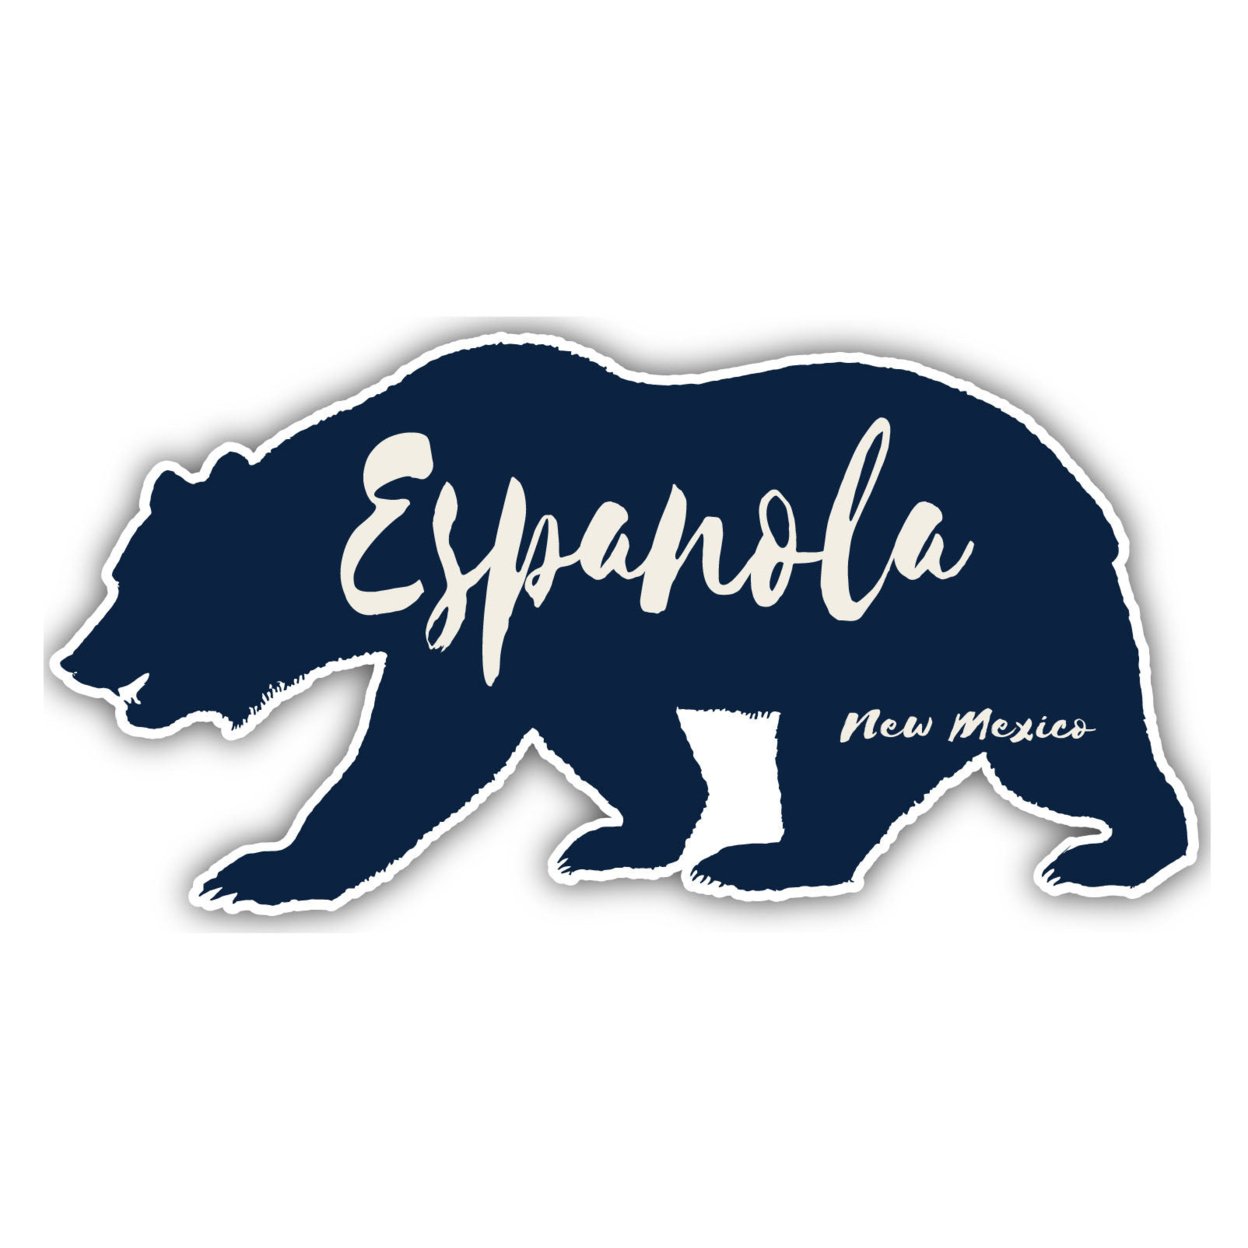 Espanola New Mexico Souvenir Decorative Stickers (Choose Theme And Size) - 4-Pack, 2-Inch, Bear